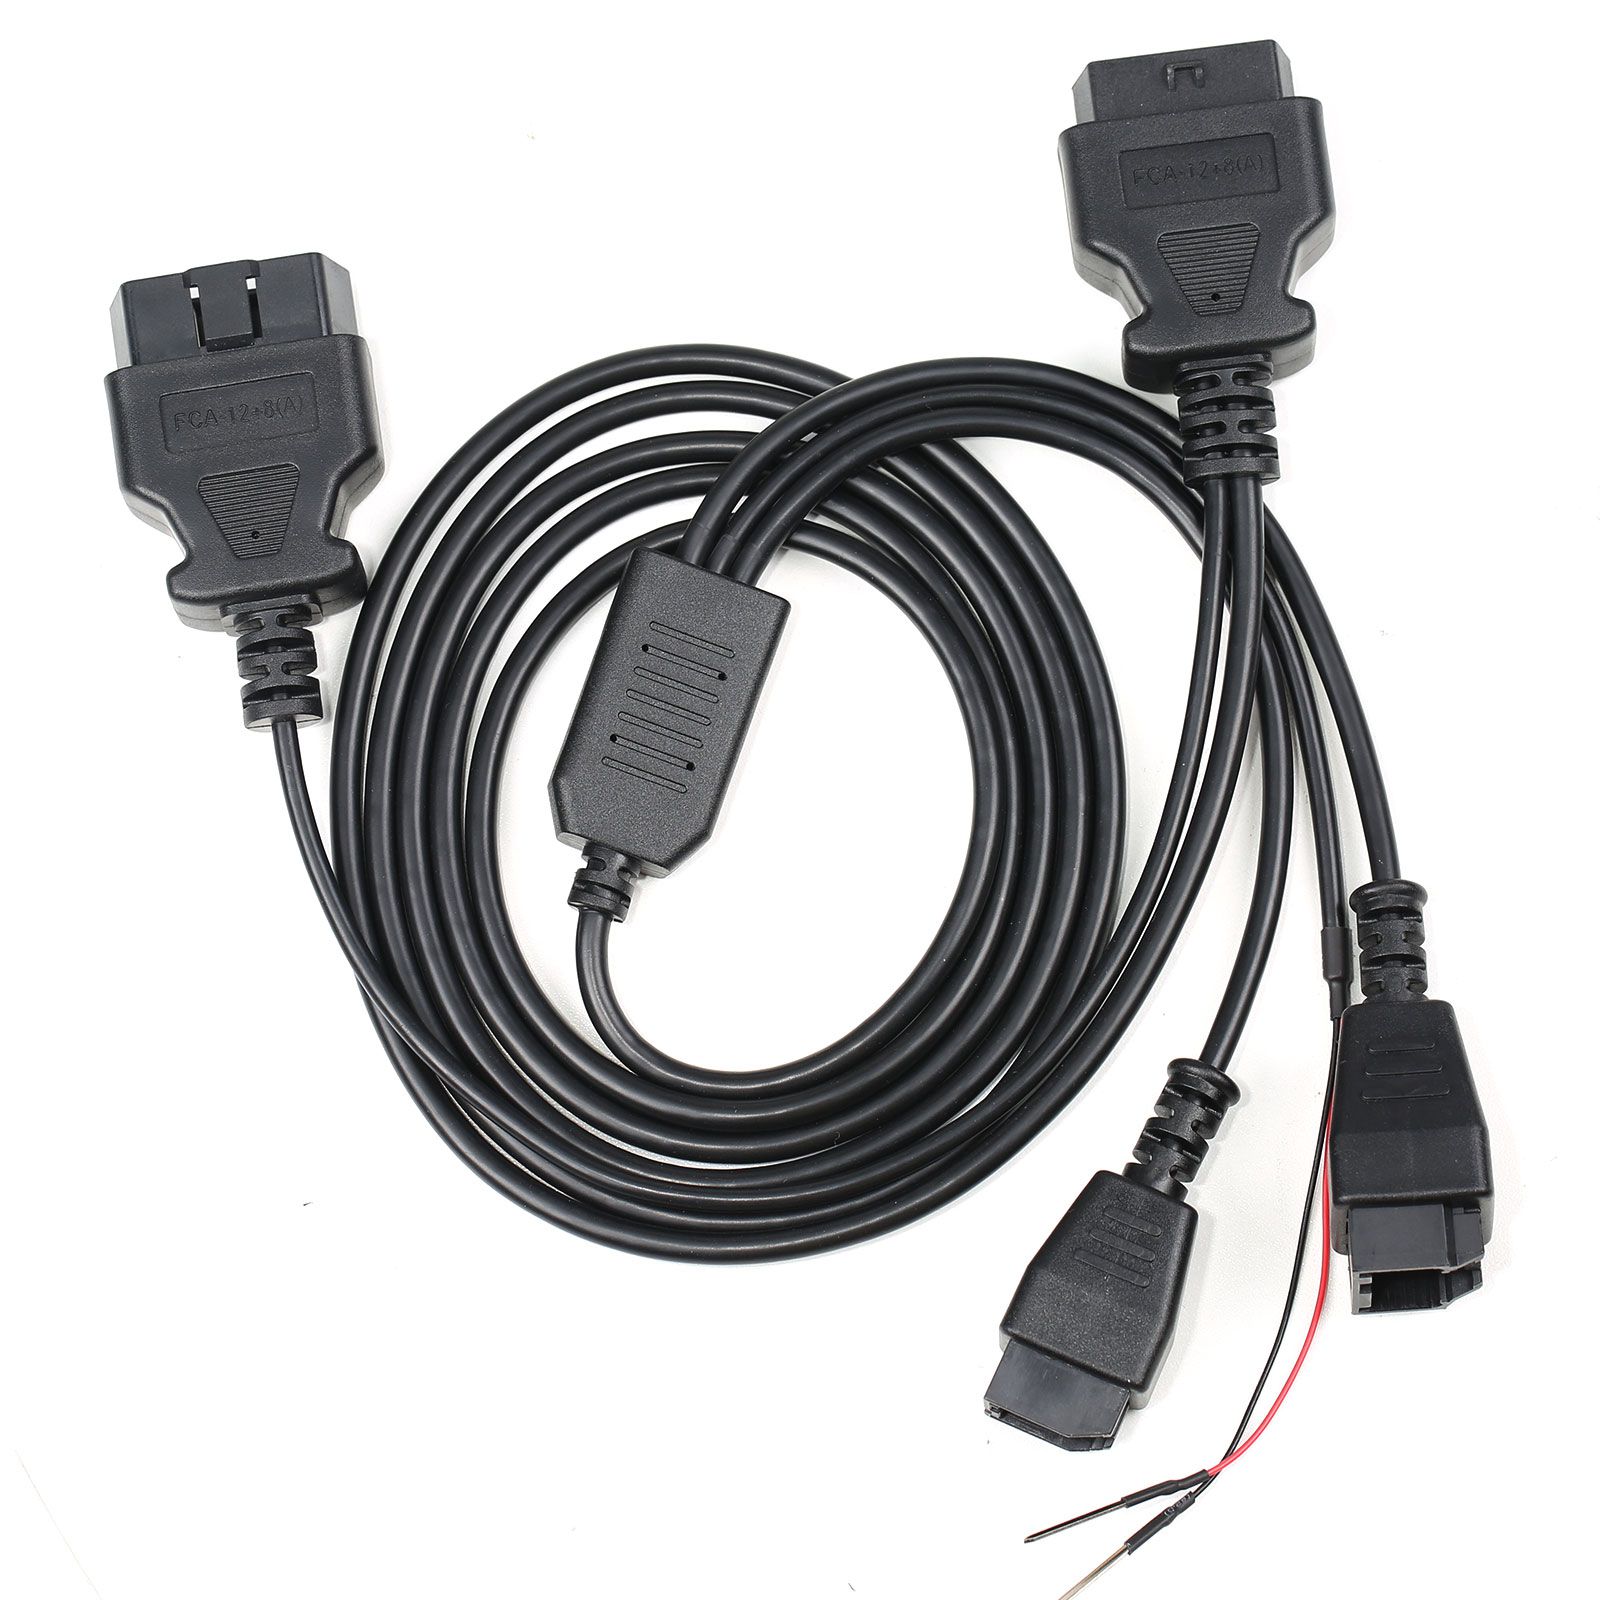 Cable obdstar FCA 12 + 8 para Chrysler X300 DP plus / X300 pro4 / odomaster / X200 PRO2